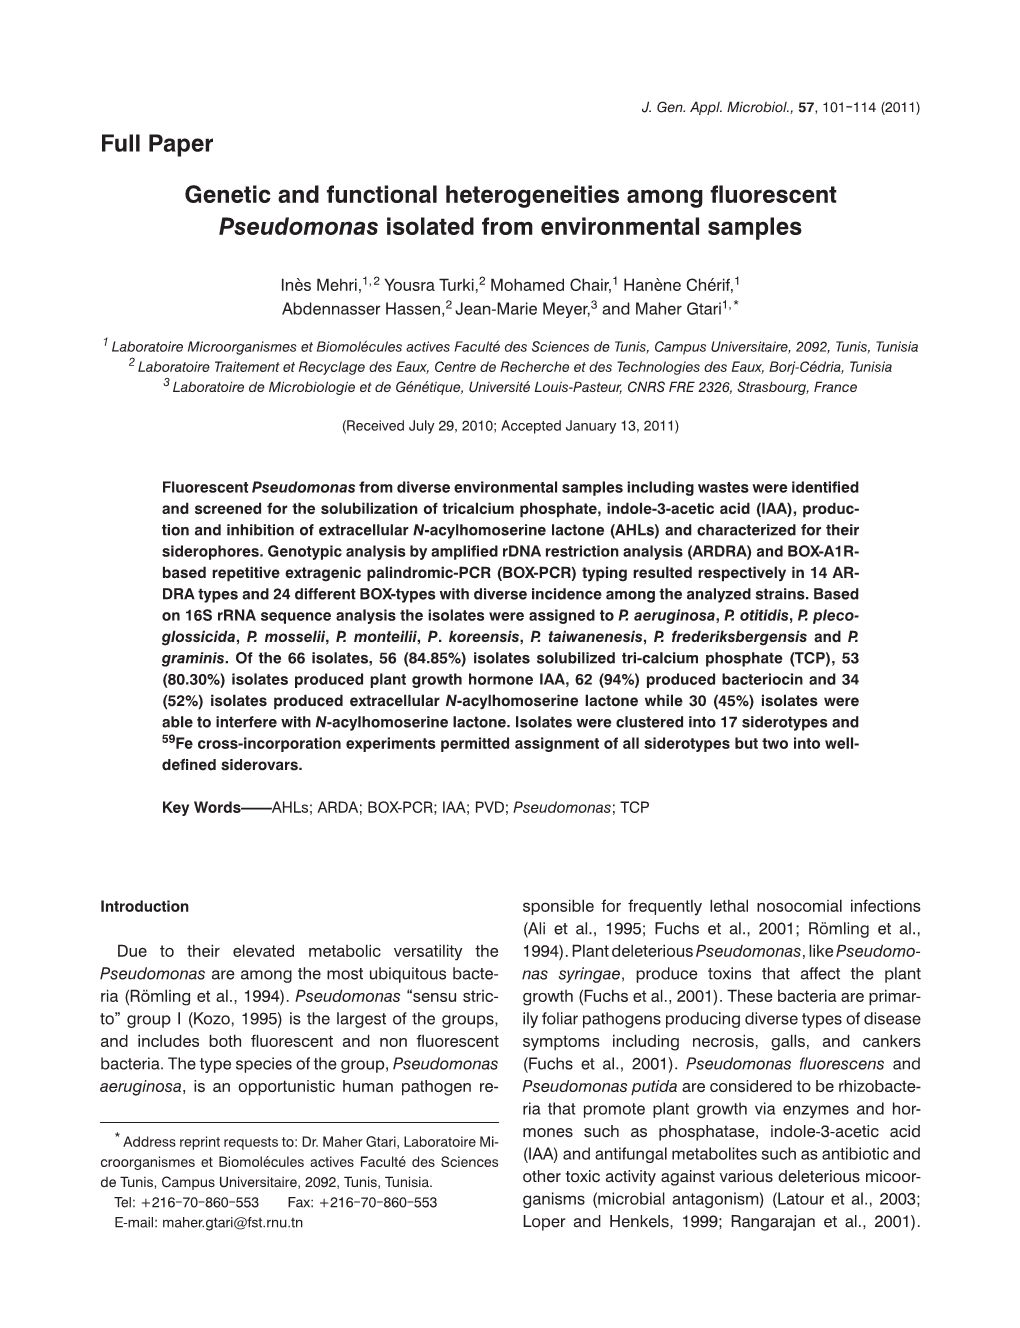 Genetic and Functional Heterogeneities Among Fluorescent Pseudomonas Isolated from Environmental Samples